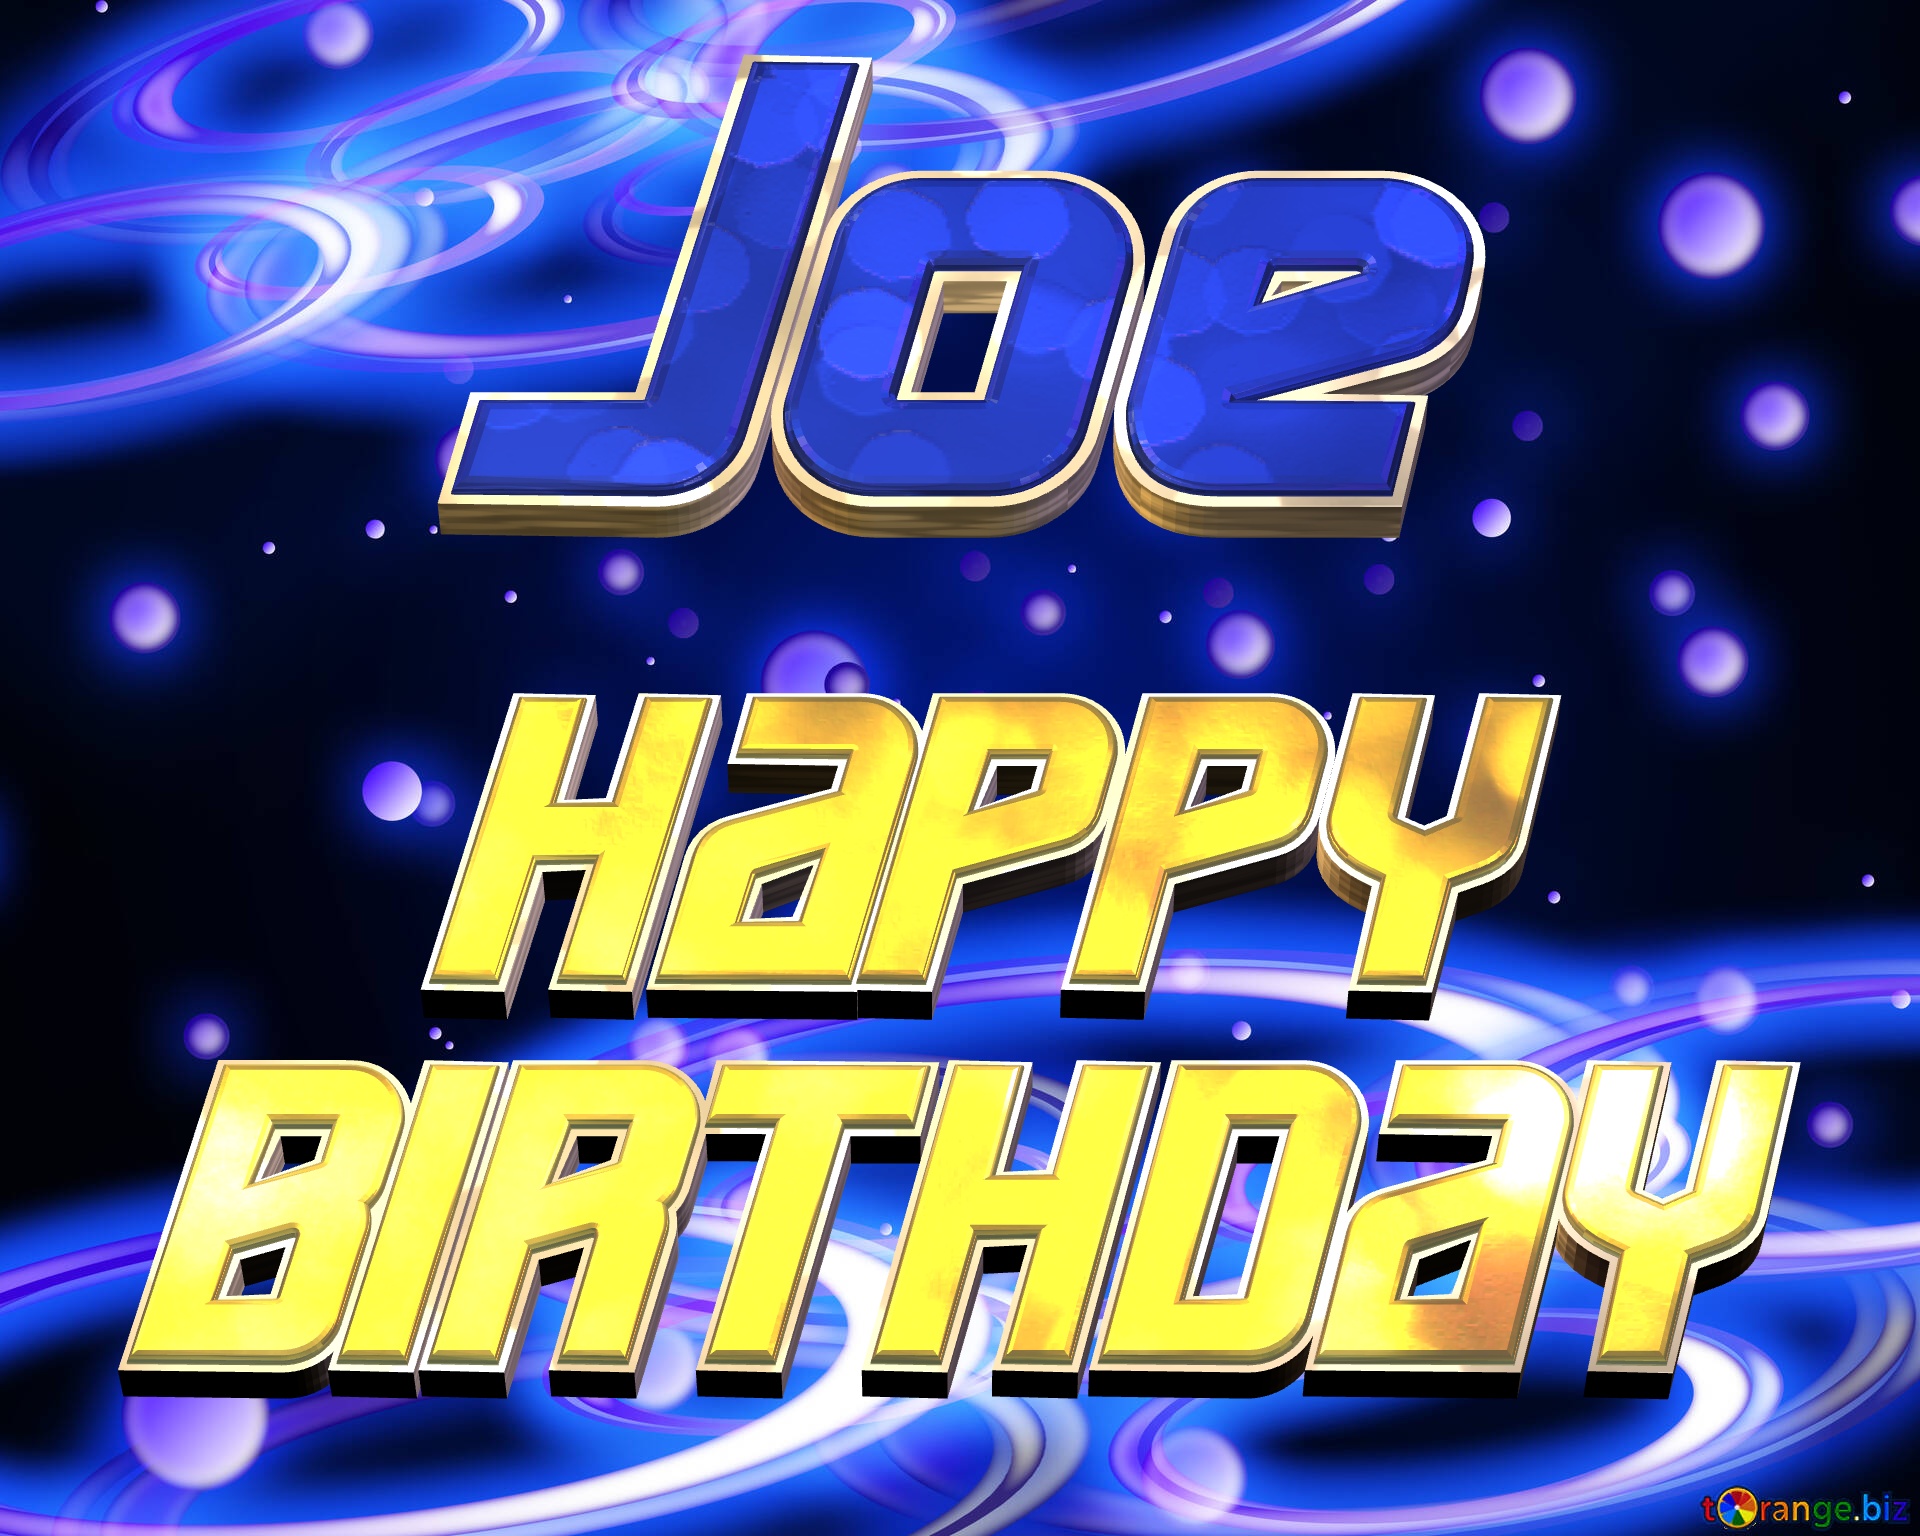 Joe Space Happy Birthday! Free Image - 2918